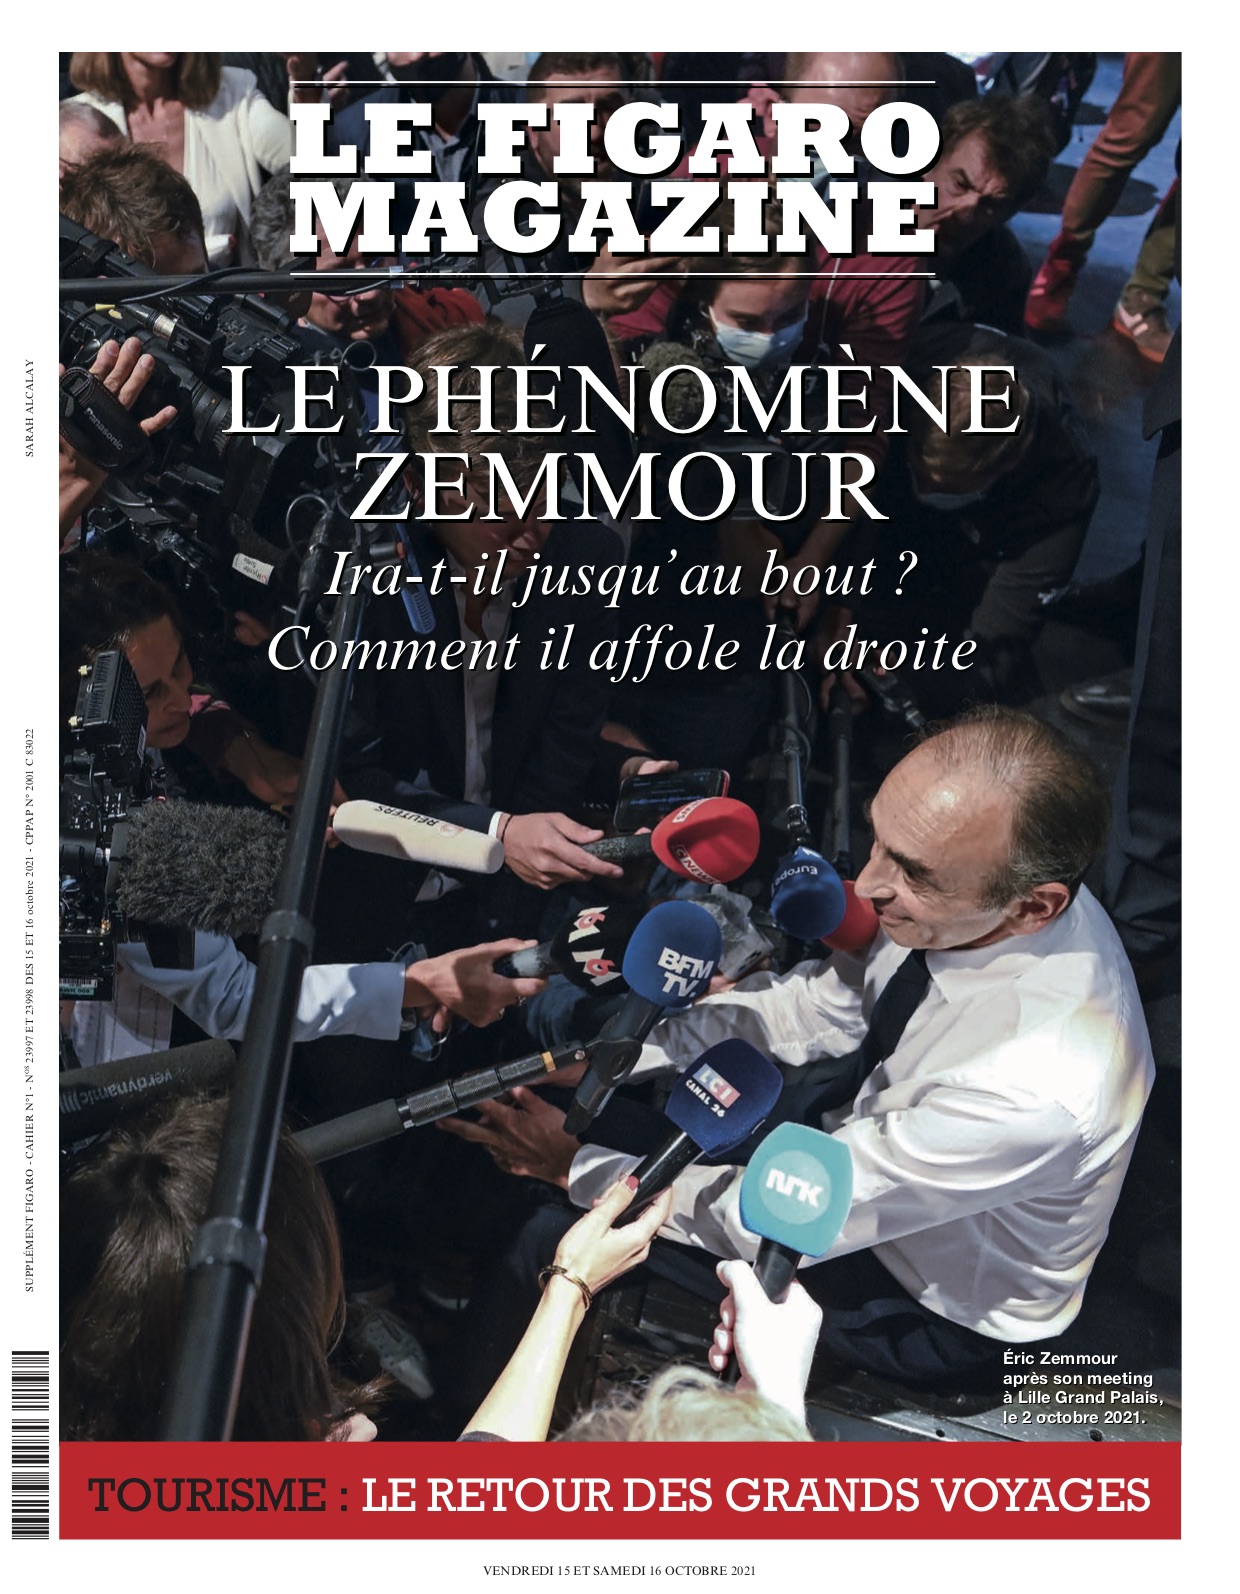 Le Figaro Magazine - Le phénomène Zemmour 